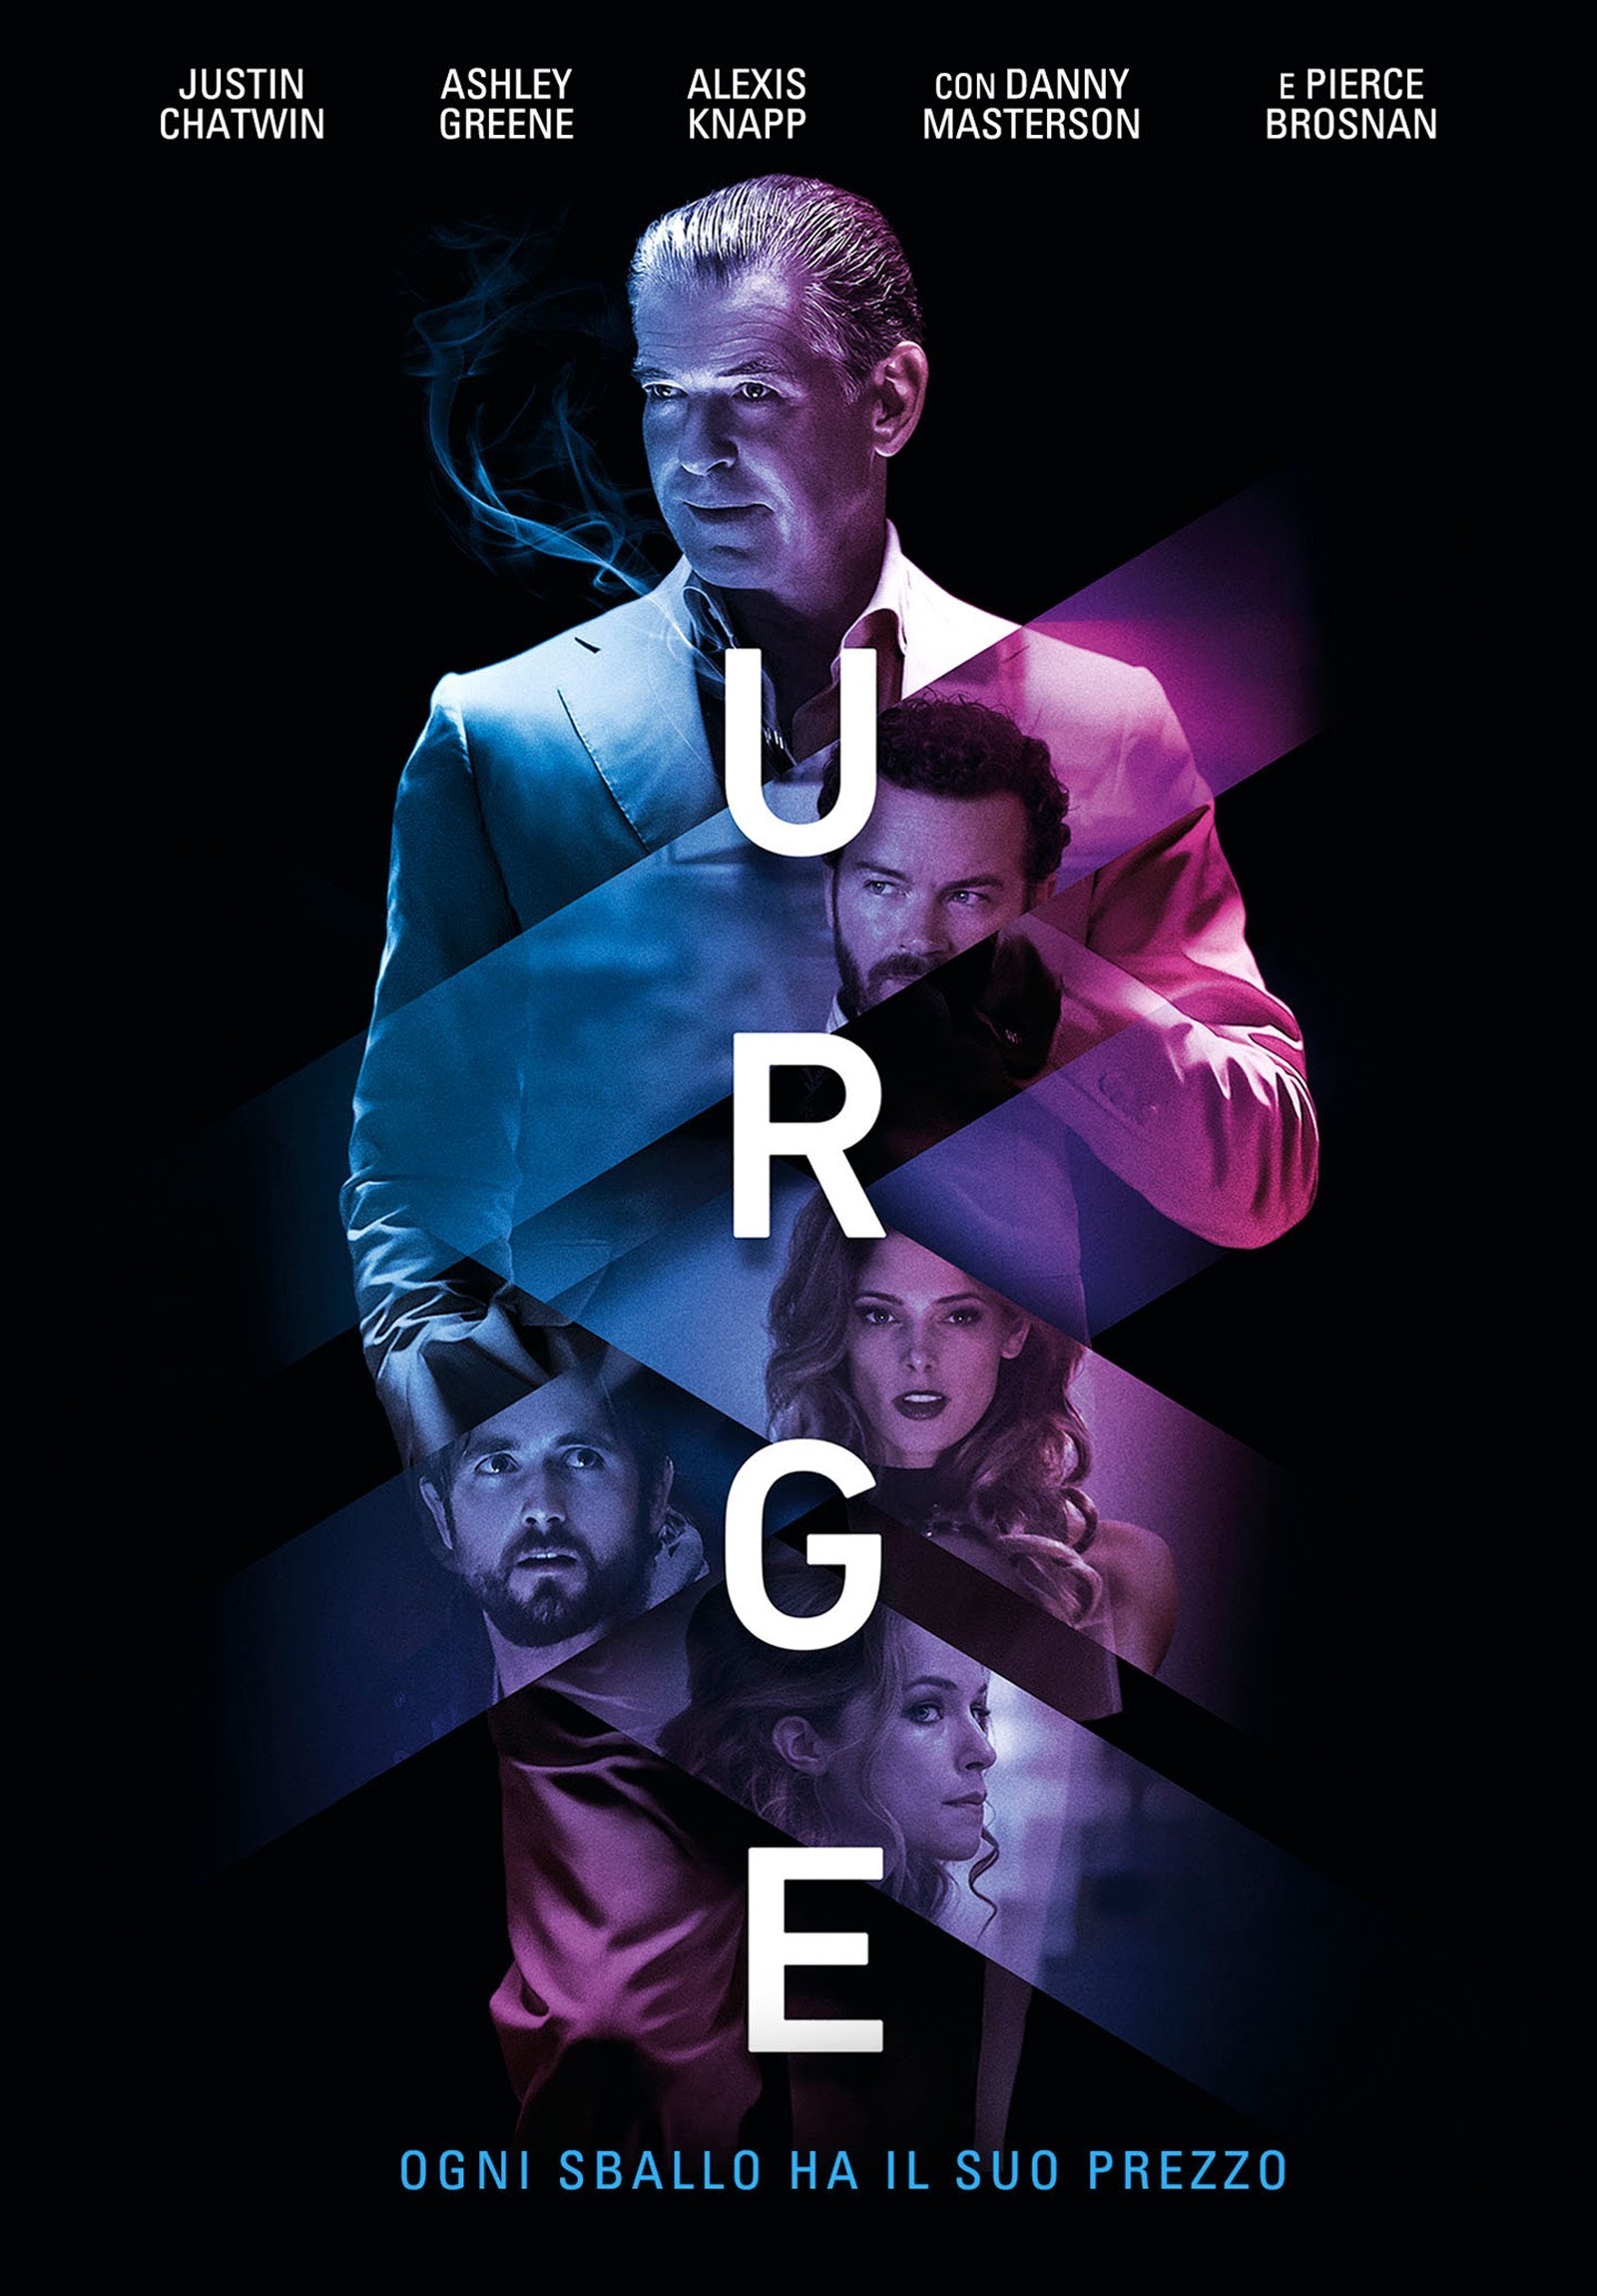 Urge [HD] (2016)